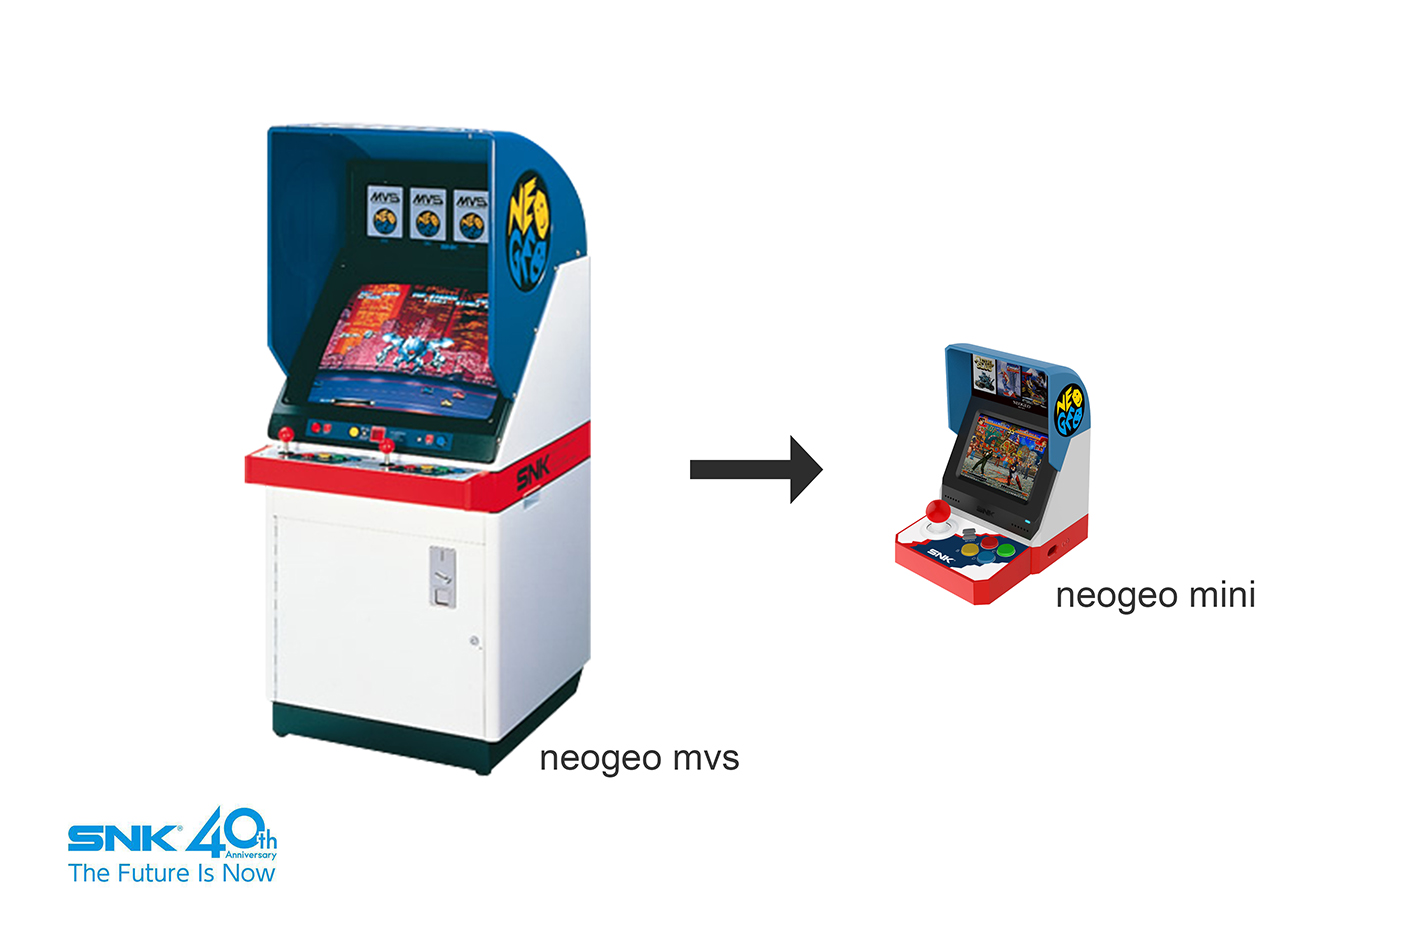 SNKブランド40周年を記念したゲーム機「NEOGEO mini」を発表